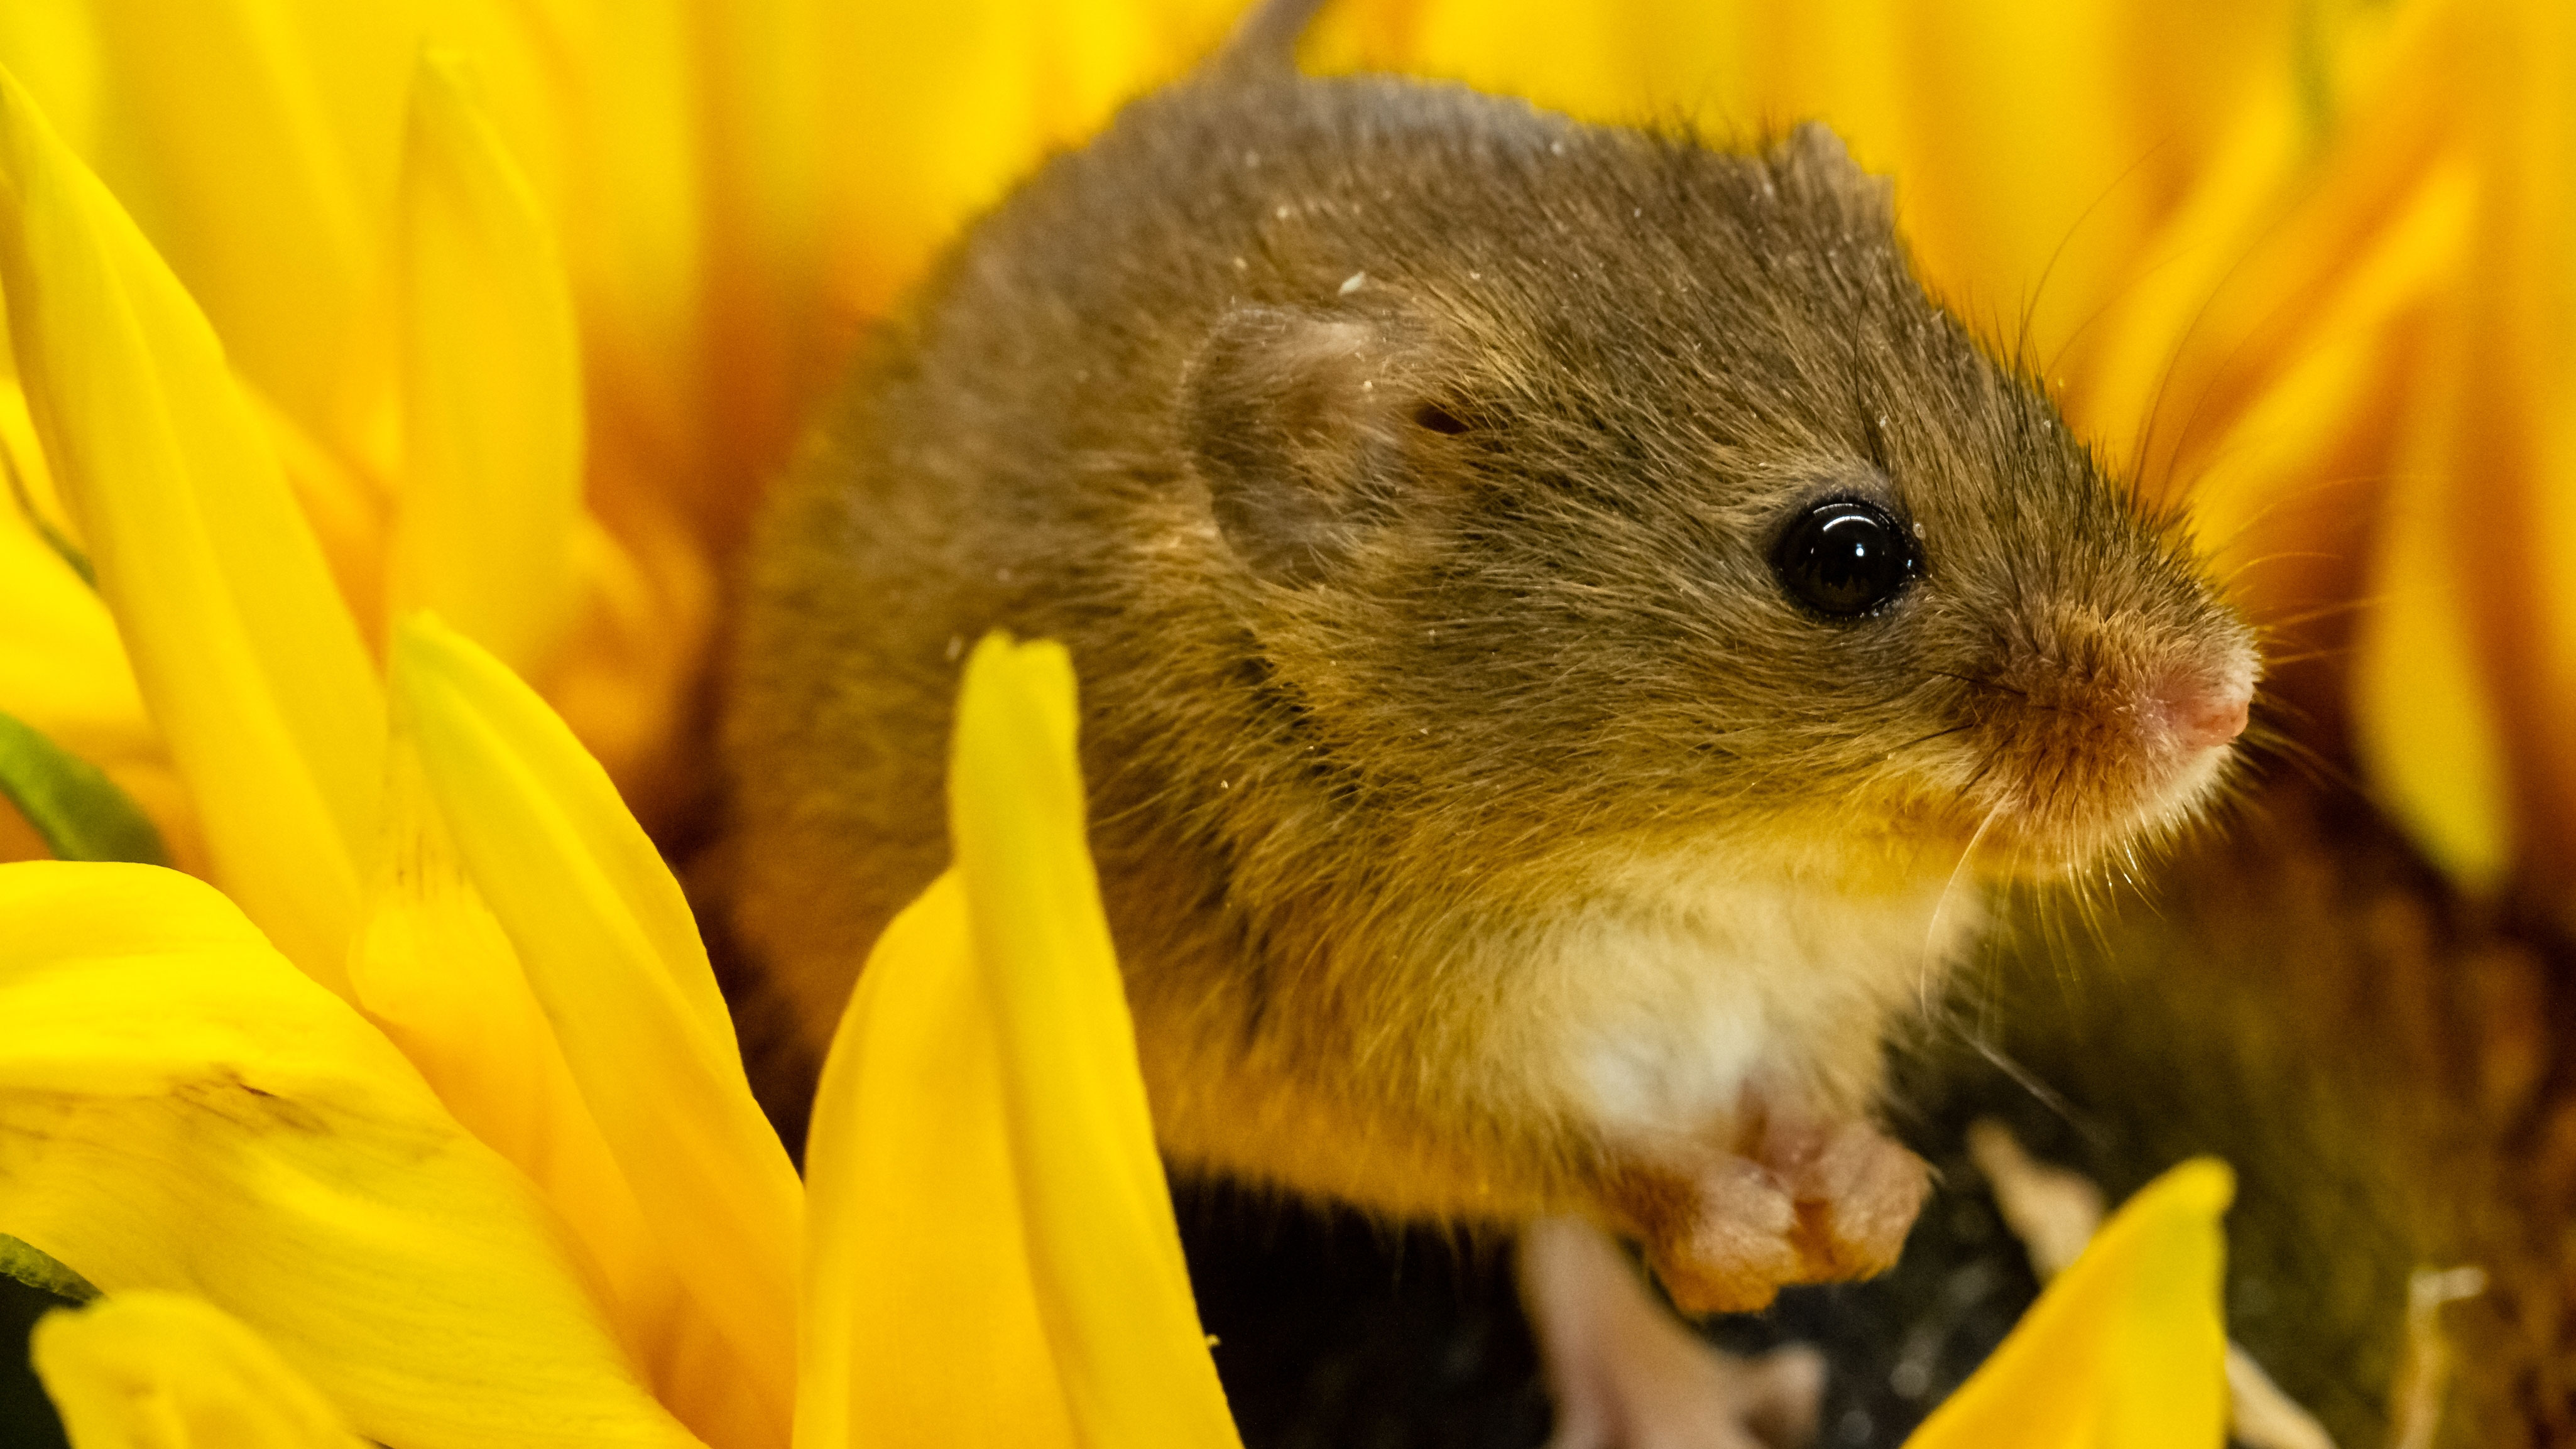 Harvest mouse in sunflower